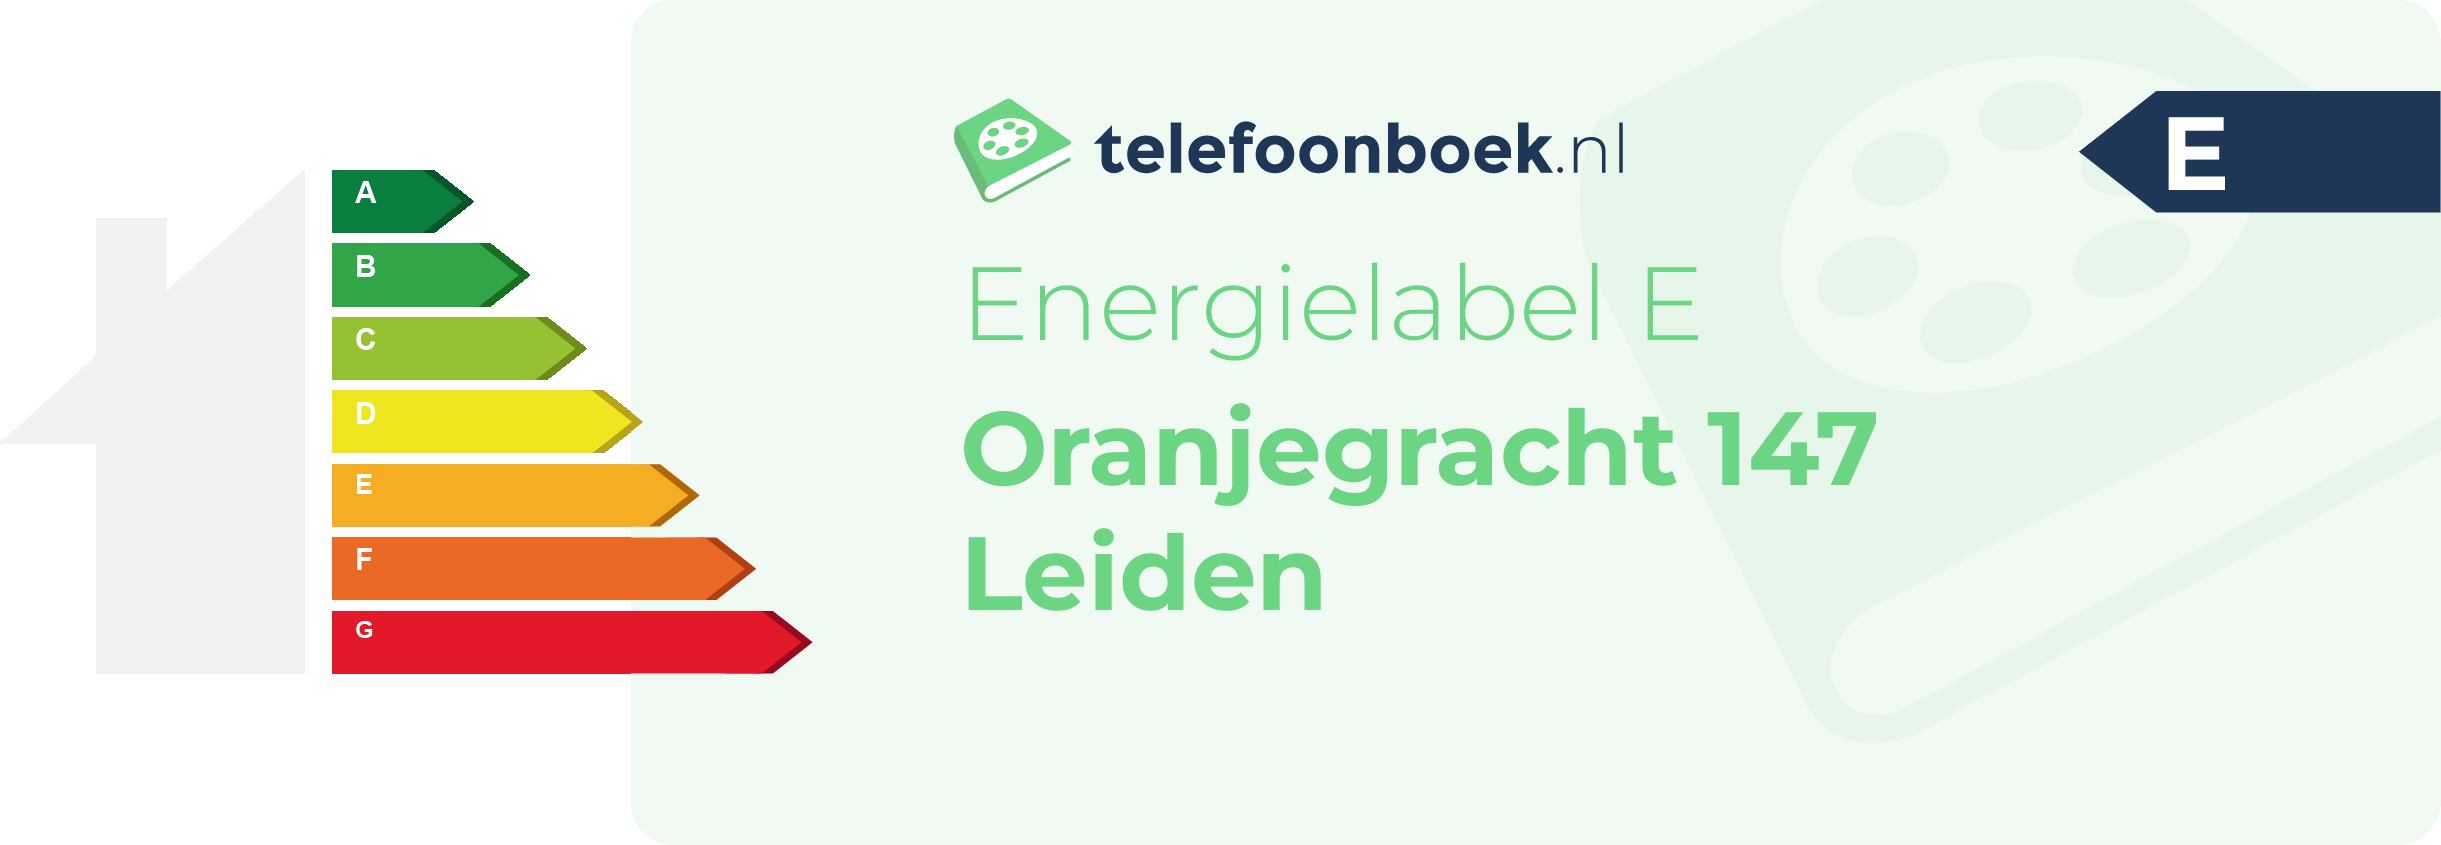 Energielabel Oranjegracht 147 Leiden